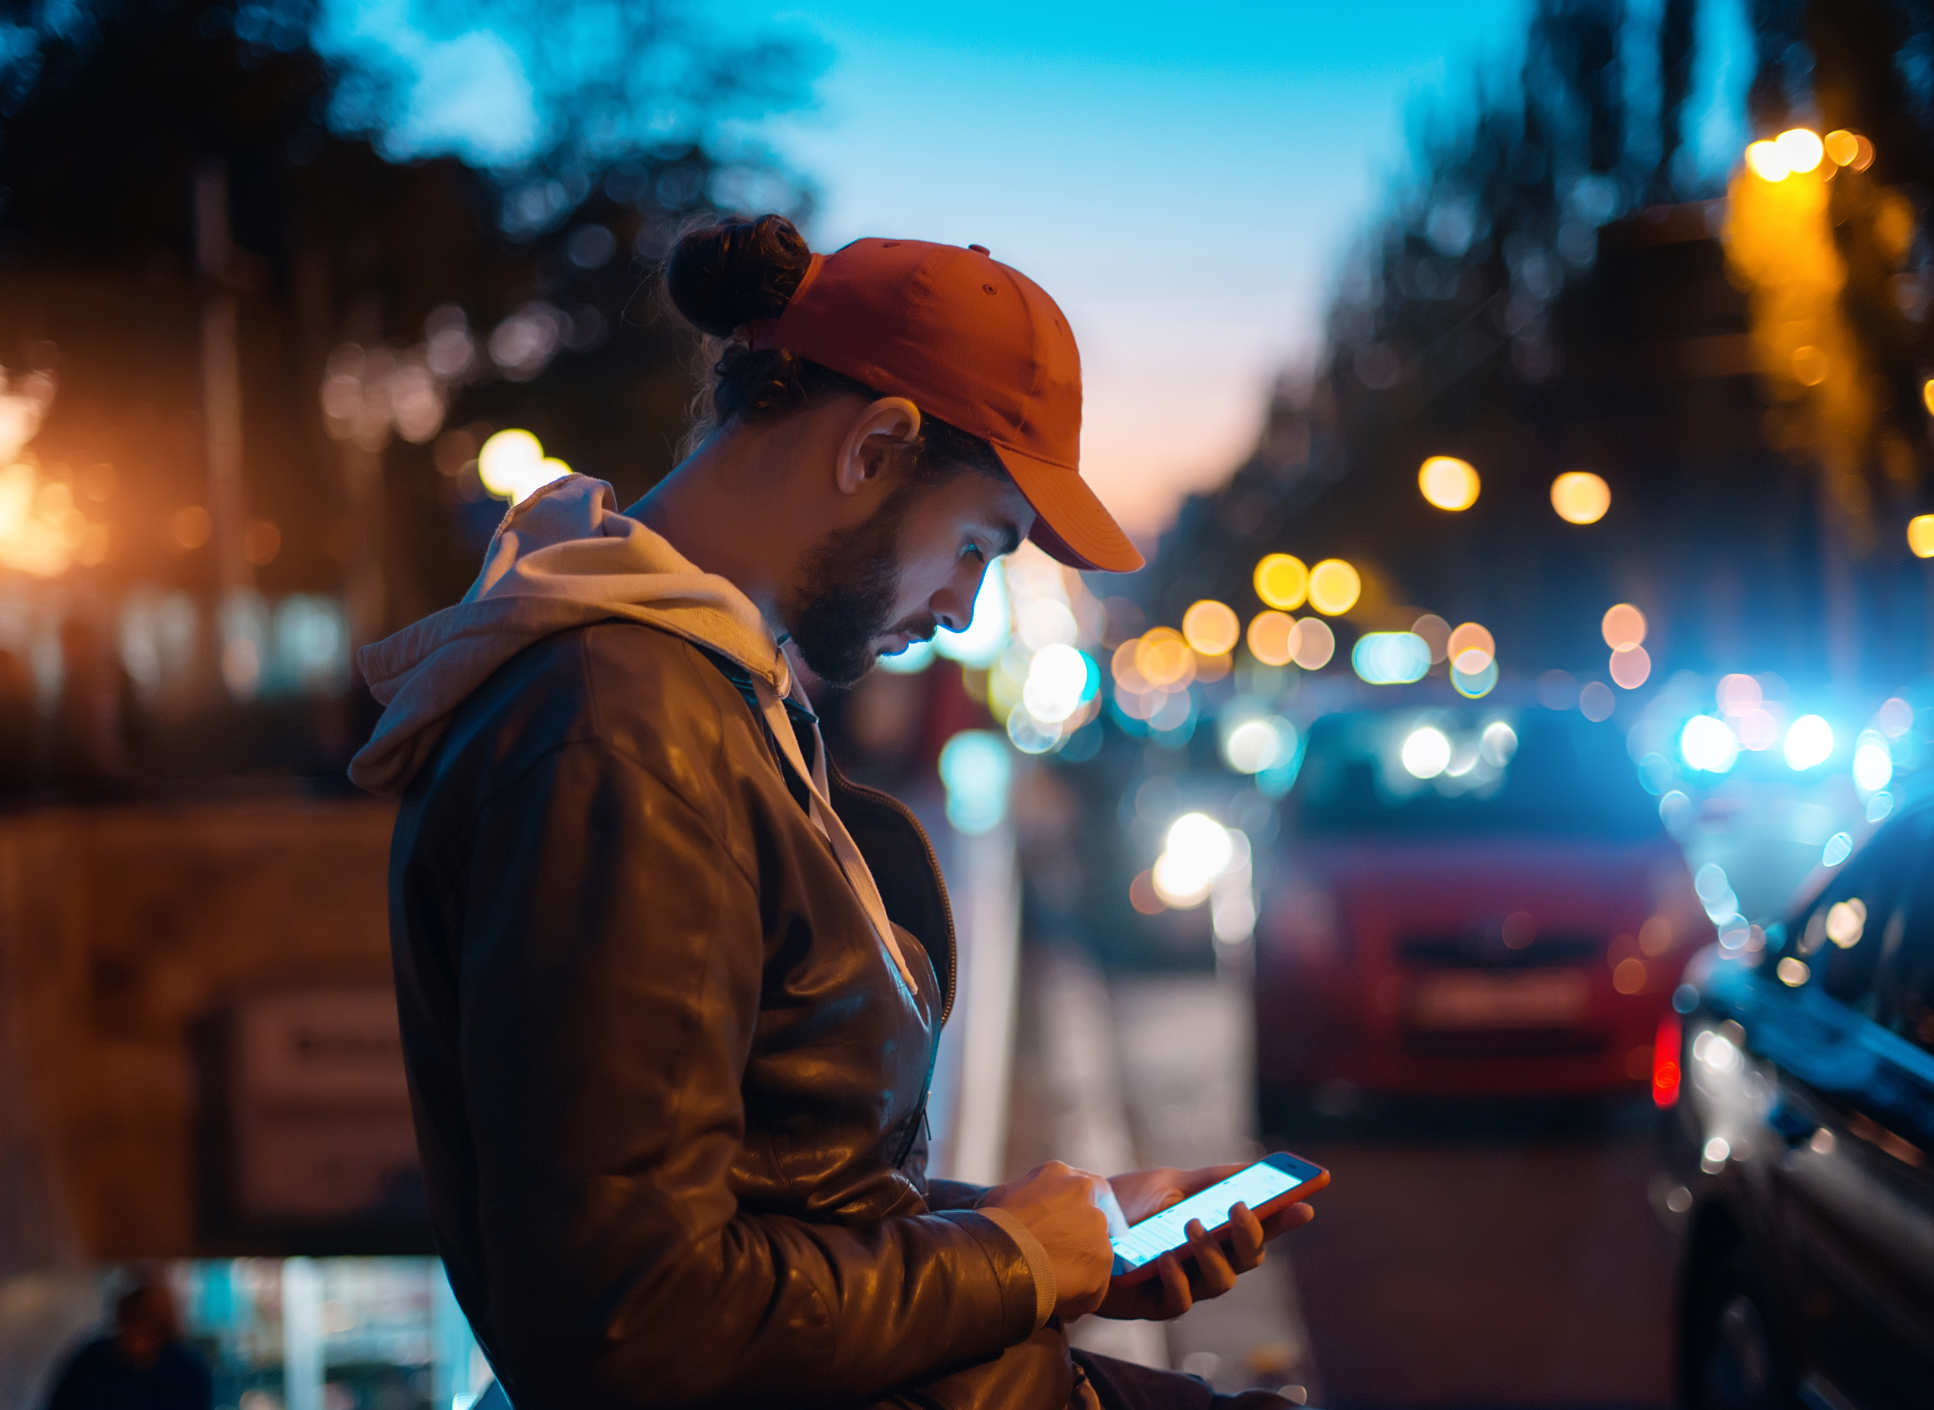 Man using phone in city at night